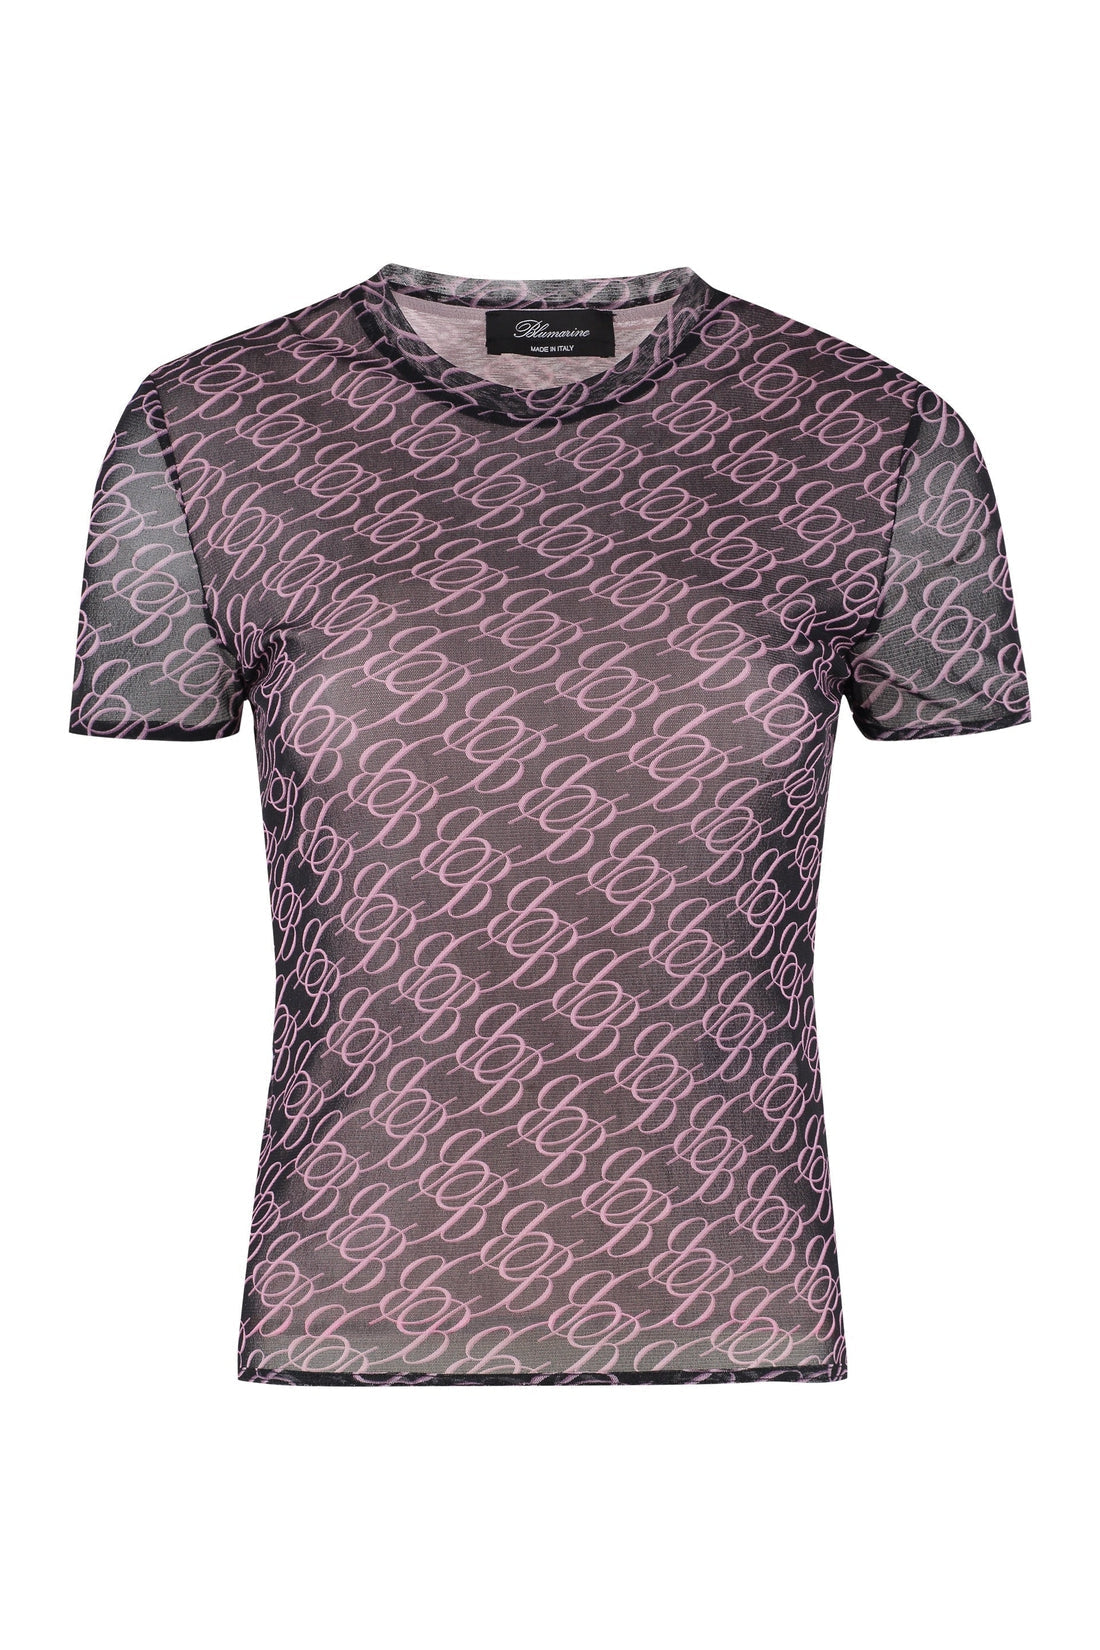 Blumarine-OUTLET-SALE-Printed t-shirt-ARCHIVIST